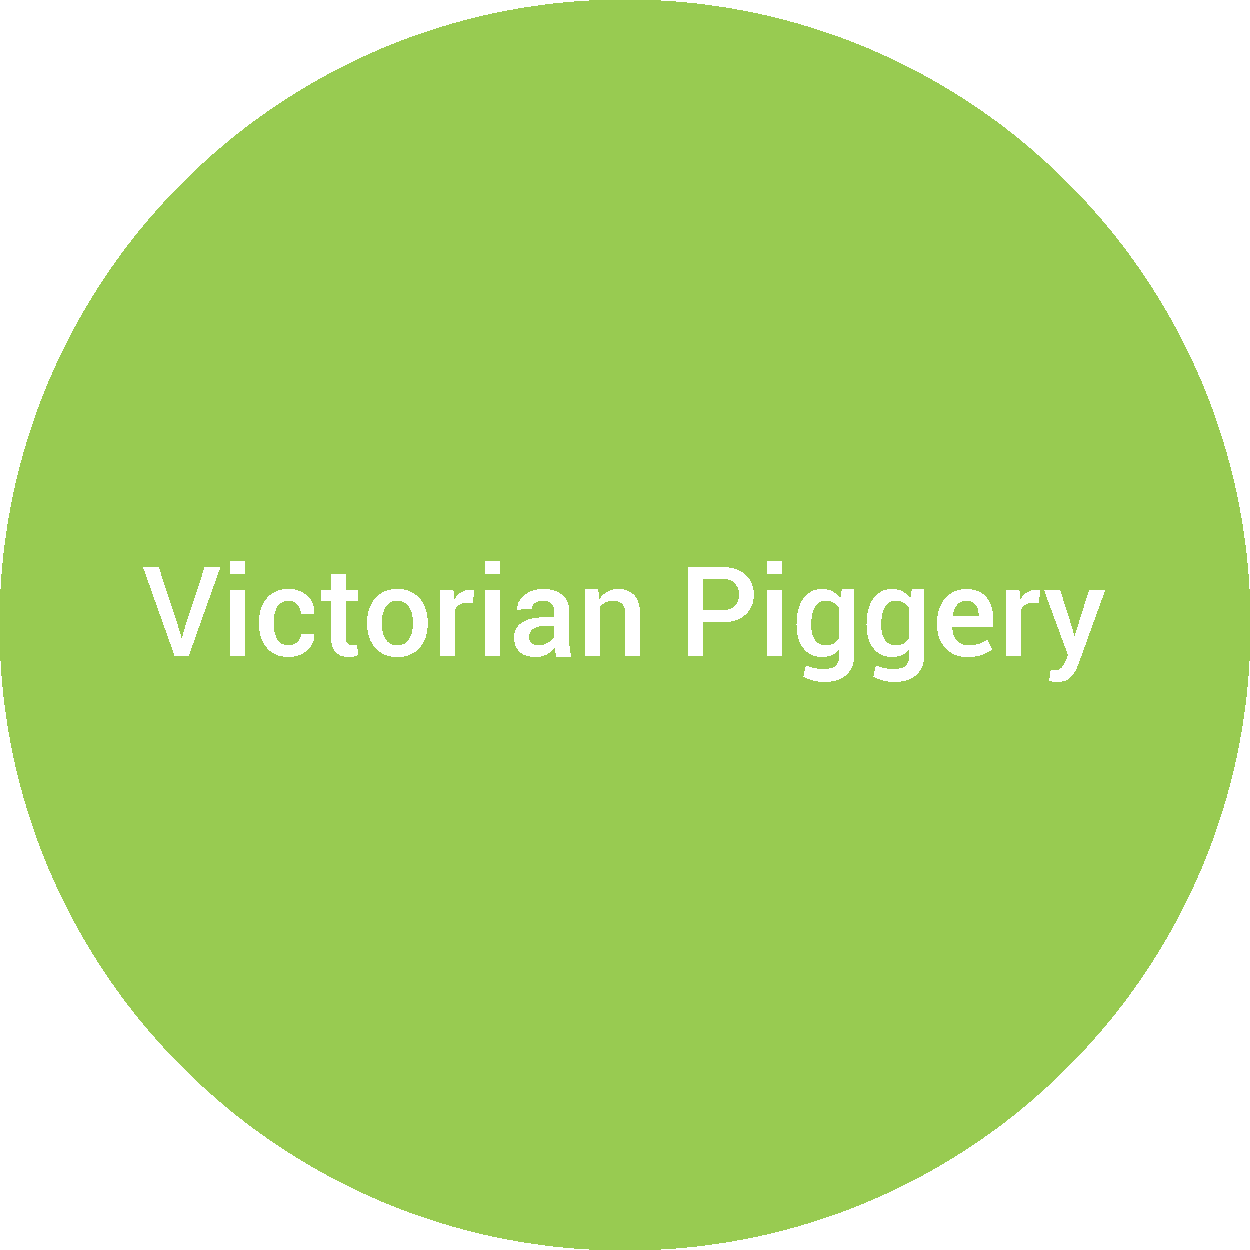 Victorian Piggery